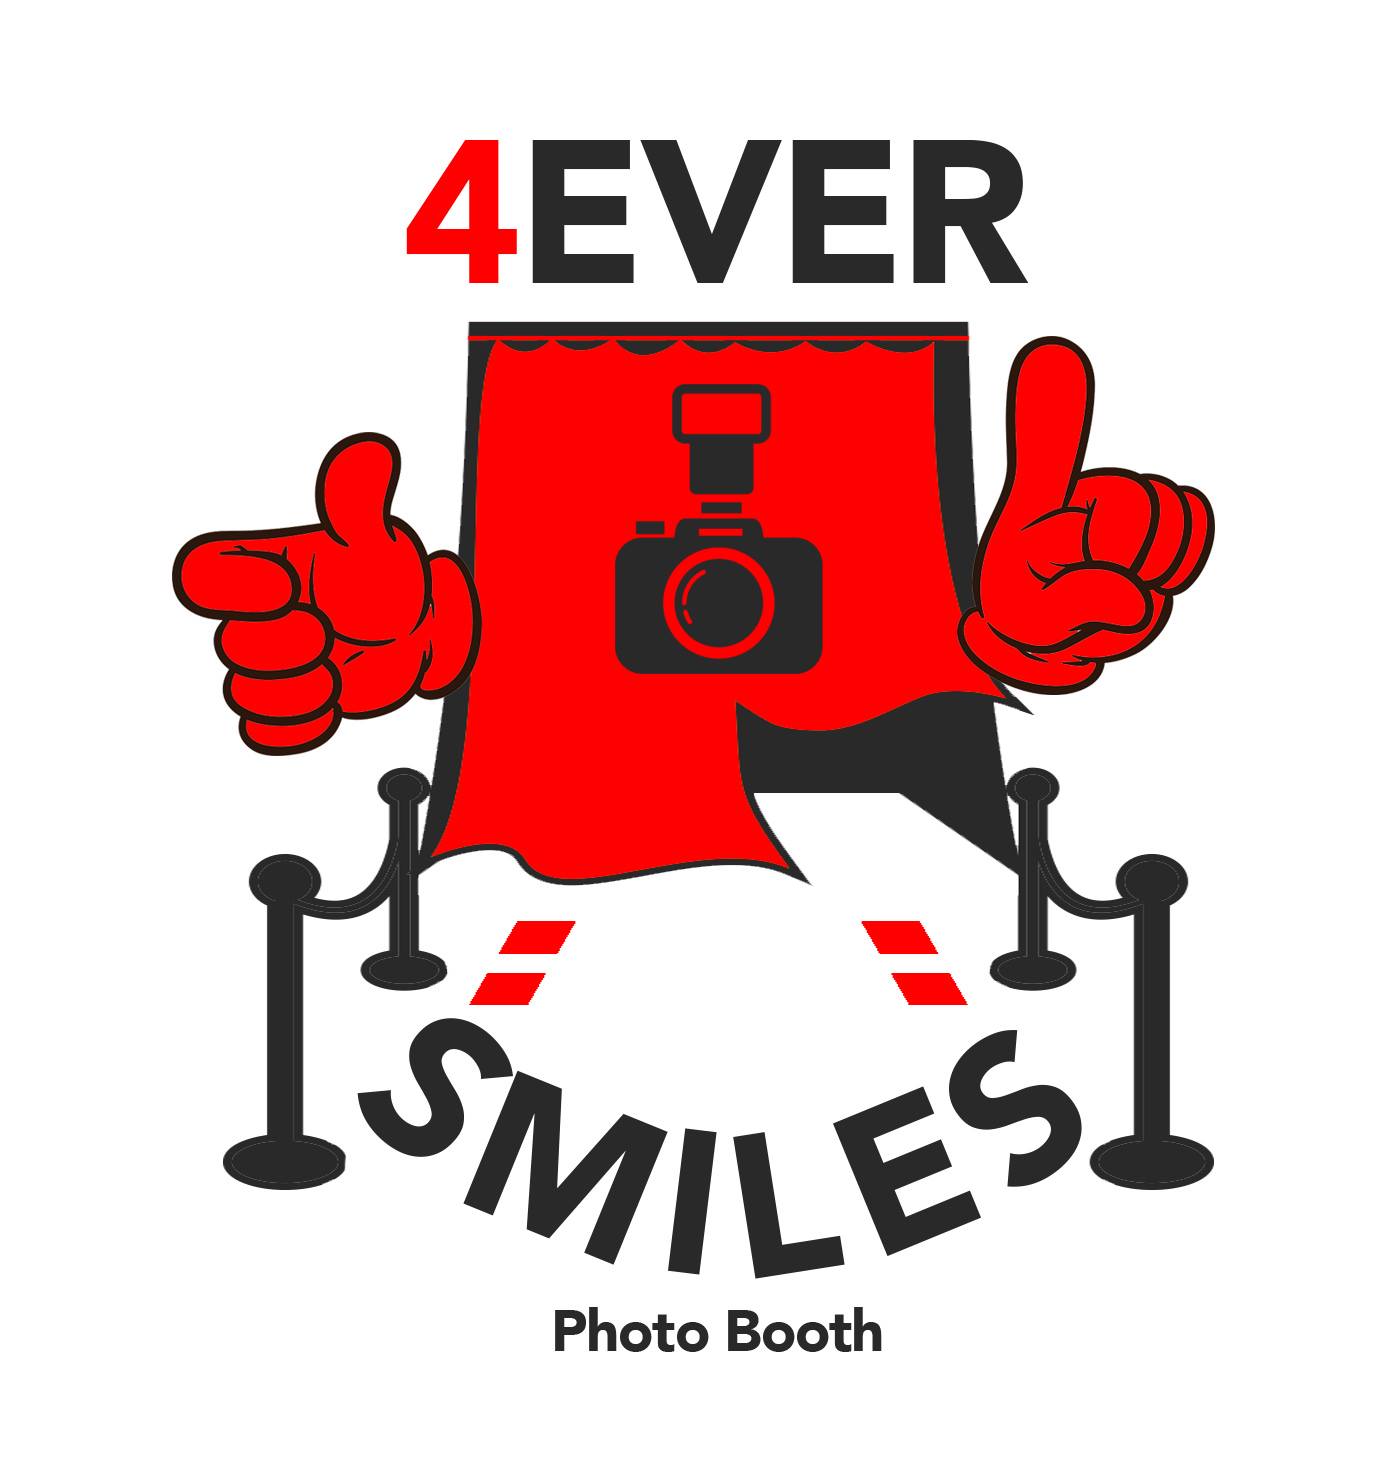 Avon Indiana Photo Booth Company: 4EverSmiles Photo Booth Logo 2023 Top Rated Photo Booth Company